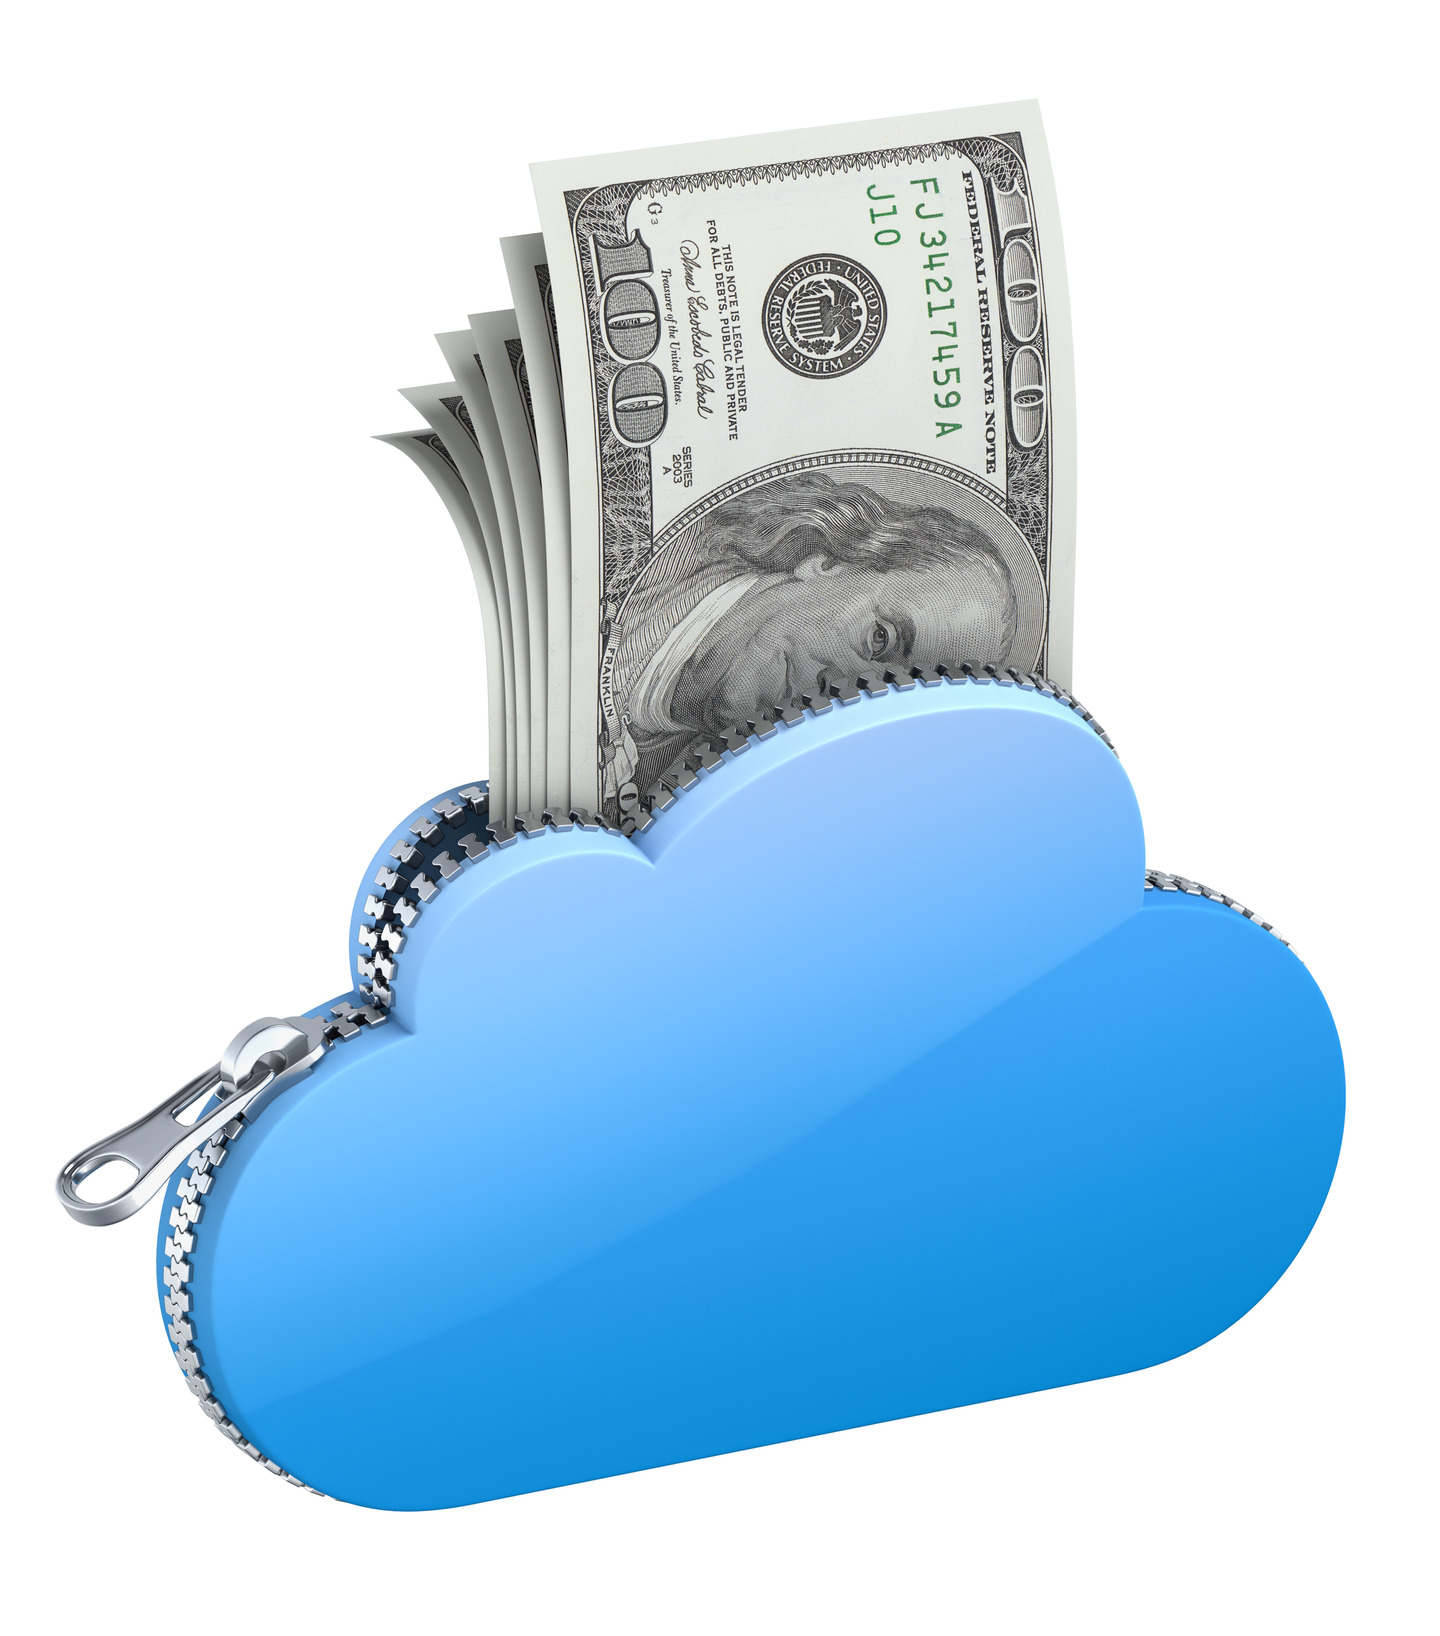 cloud optimization saves money